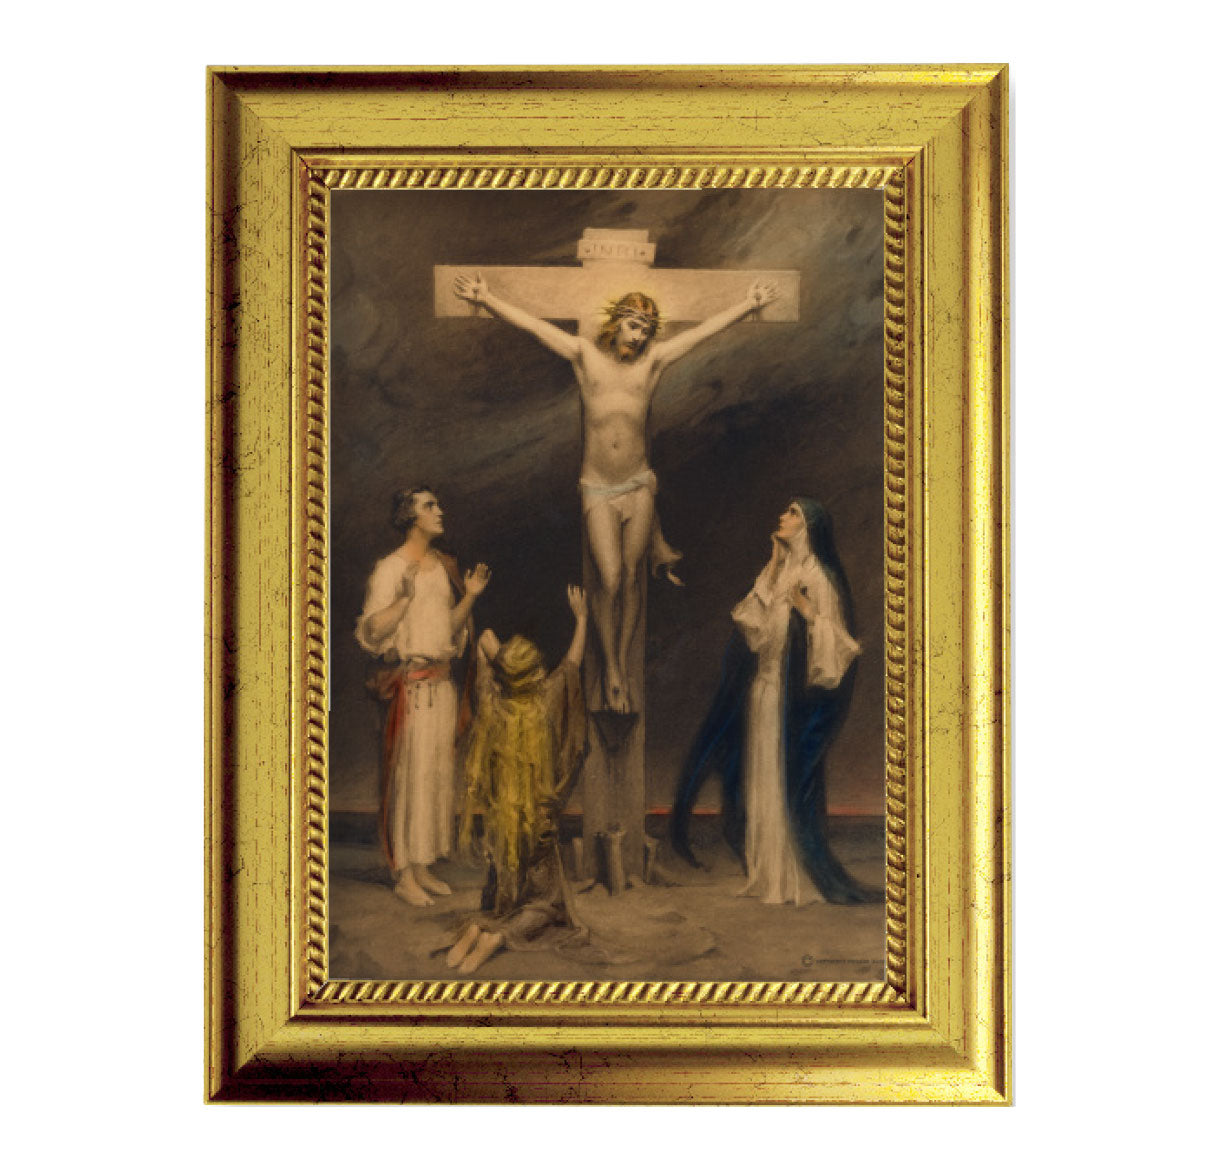 The Crucifixion of Christ Gold-Leaf Framed Art